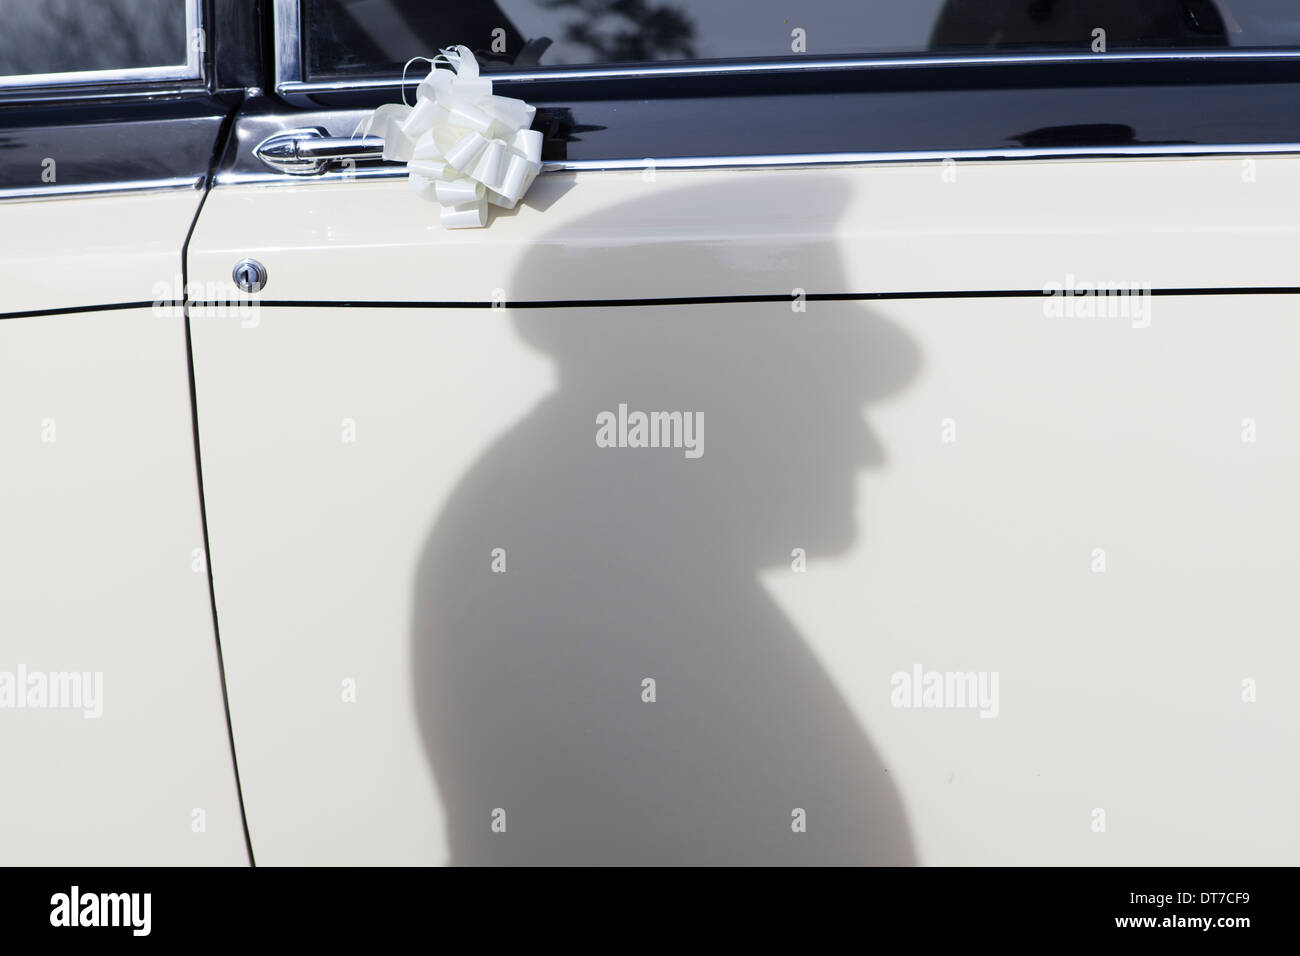 Shadow of chauffeur in car door Stock Photo